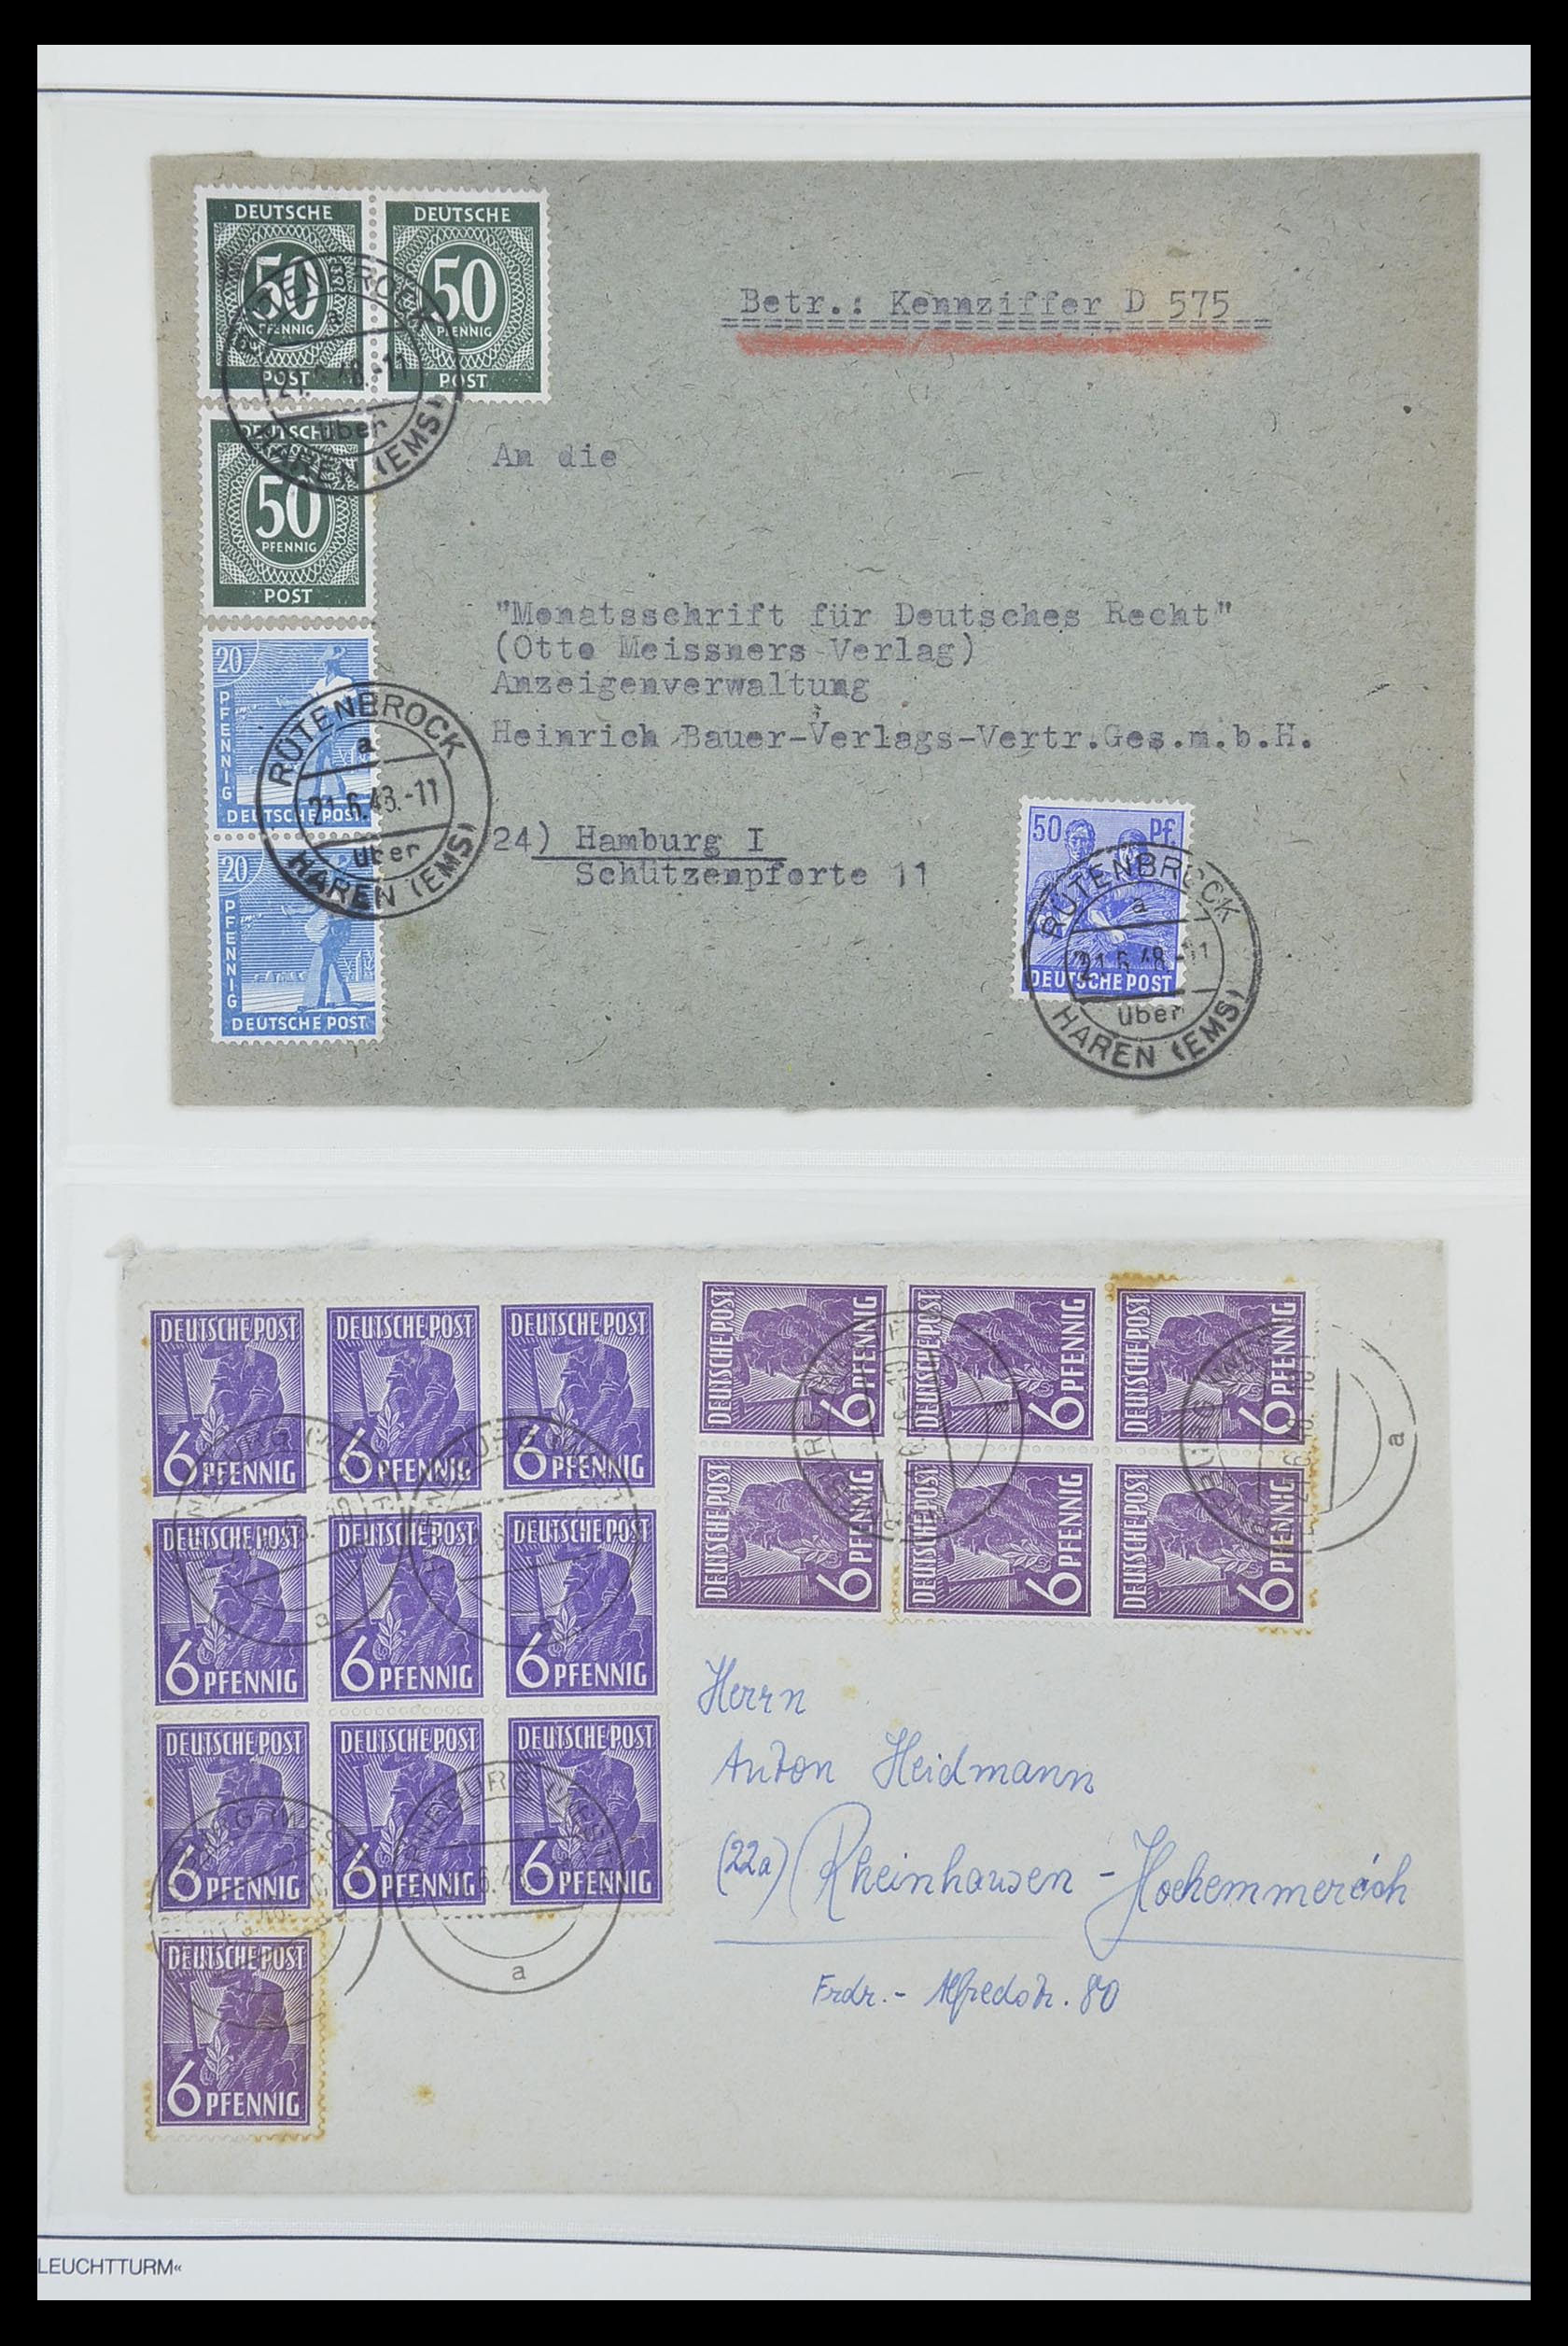 33837 040 - Stamp collection 33837 German Zones 1945-1948.